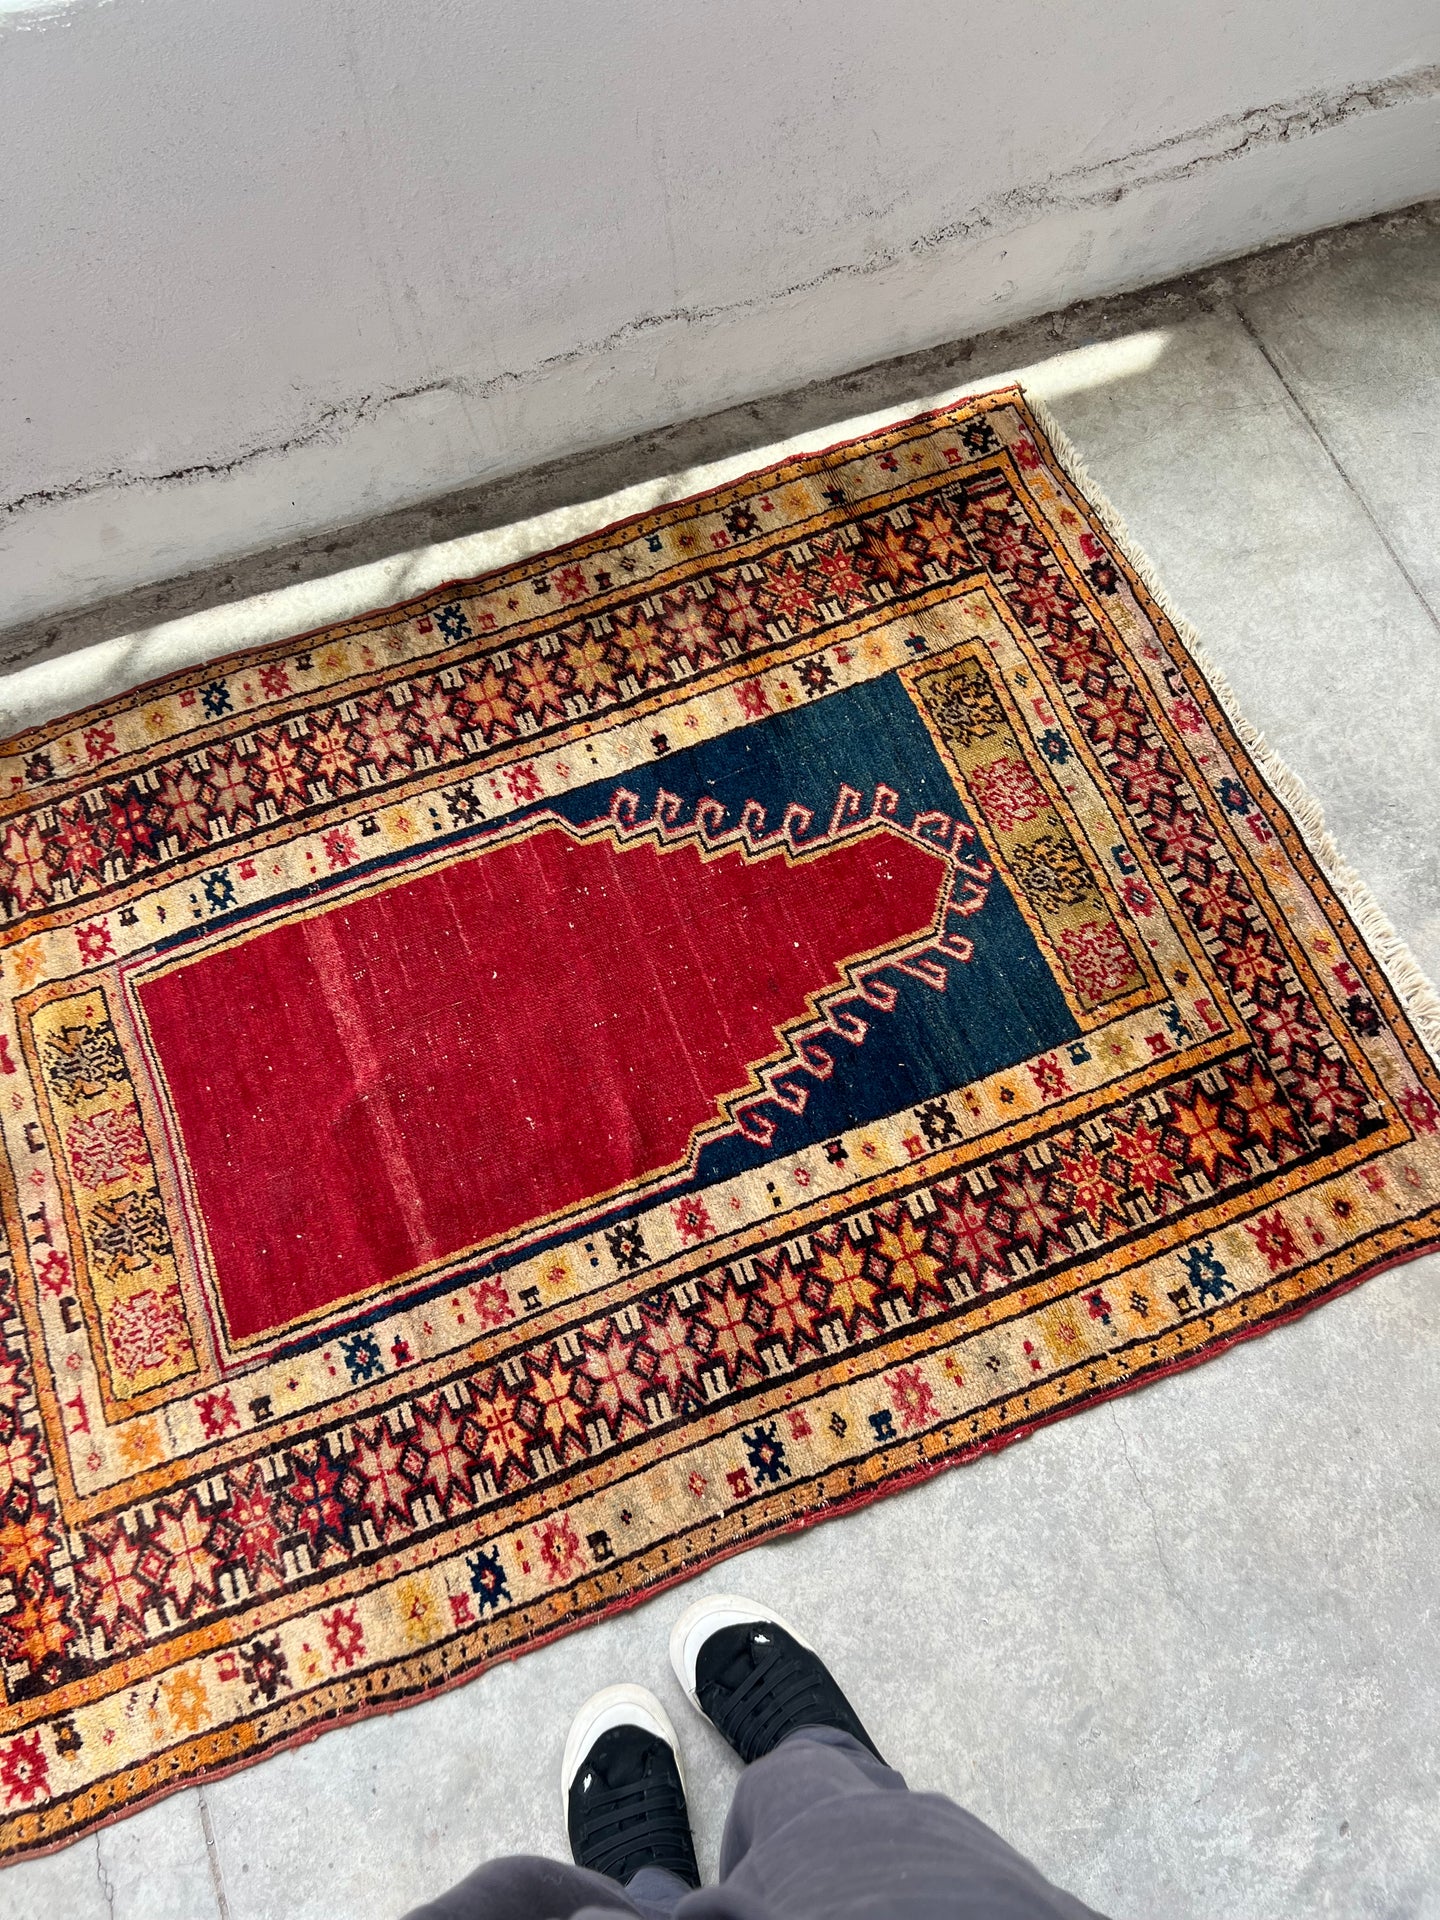 Parisa, vintage Persian prayer rug, 3’6 x 5’